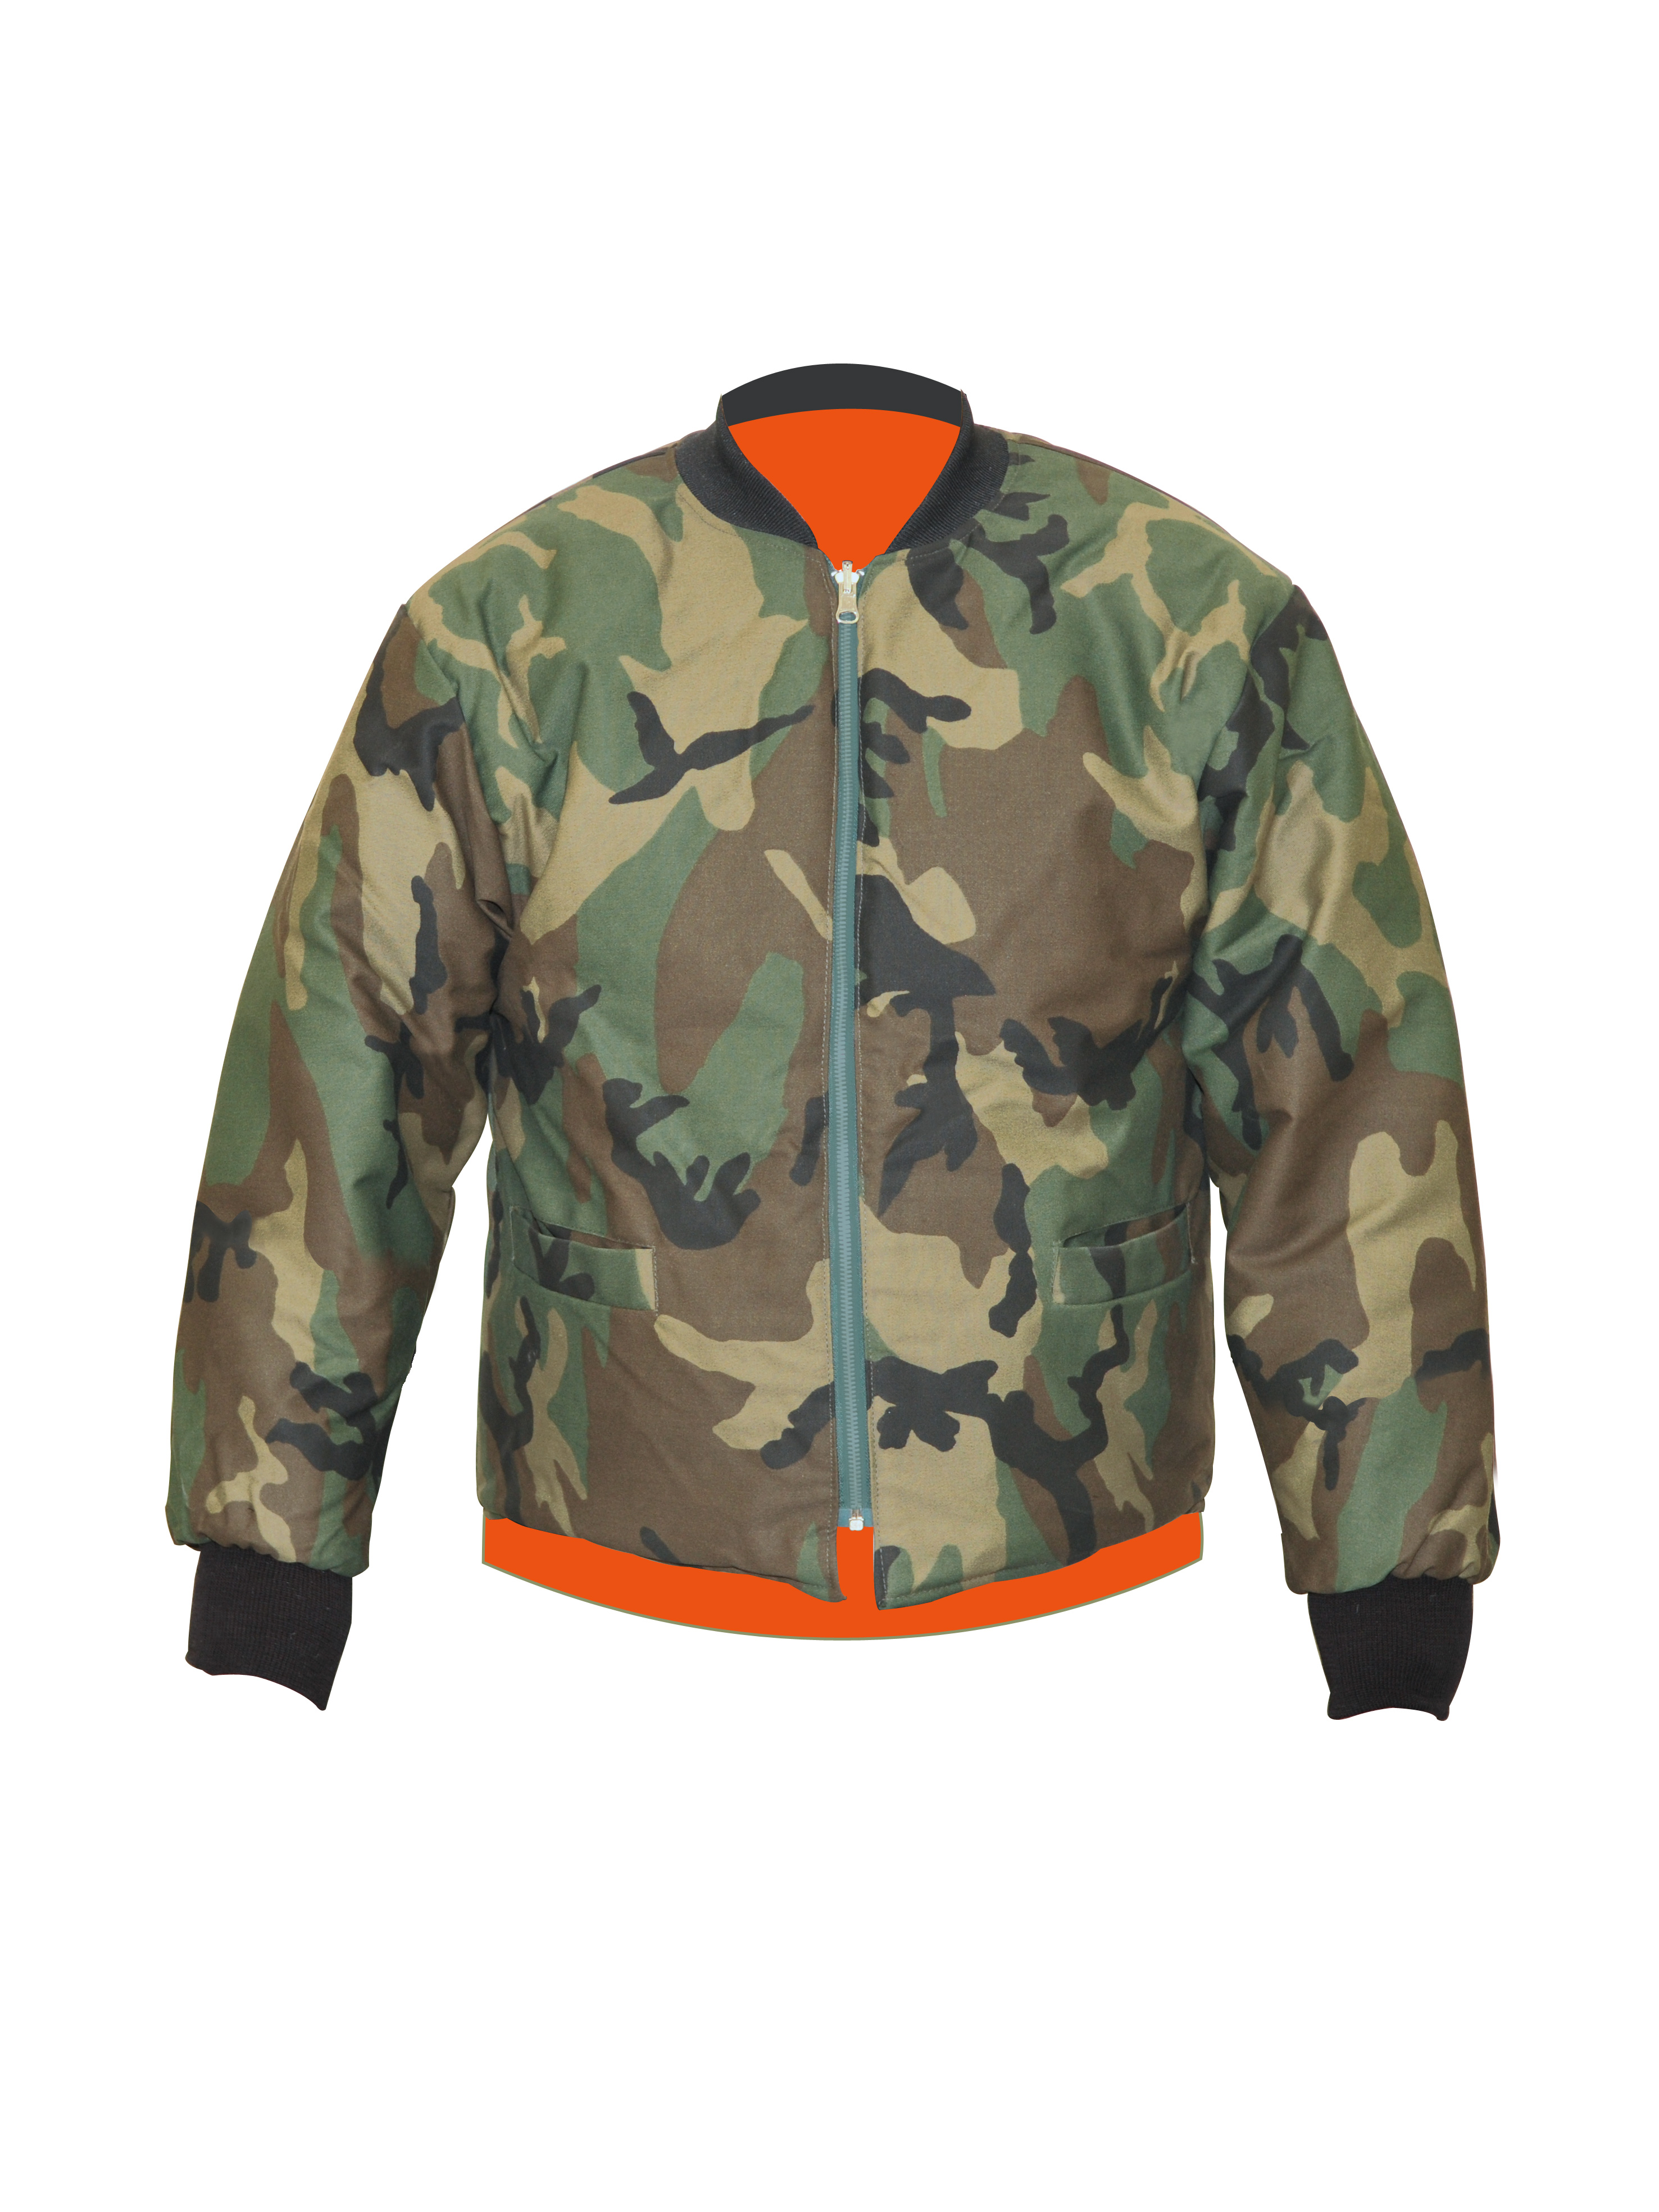 Big Al Camouflage Reversible Jacket - 1401